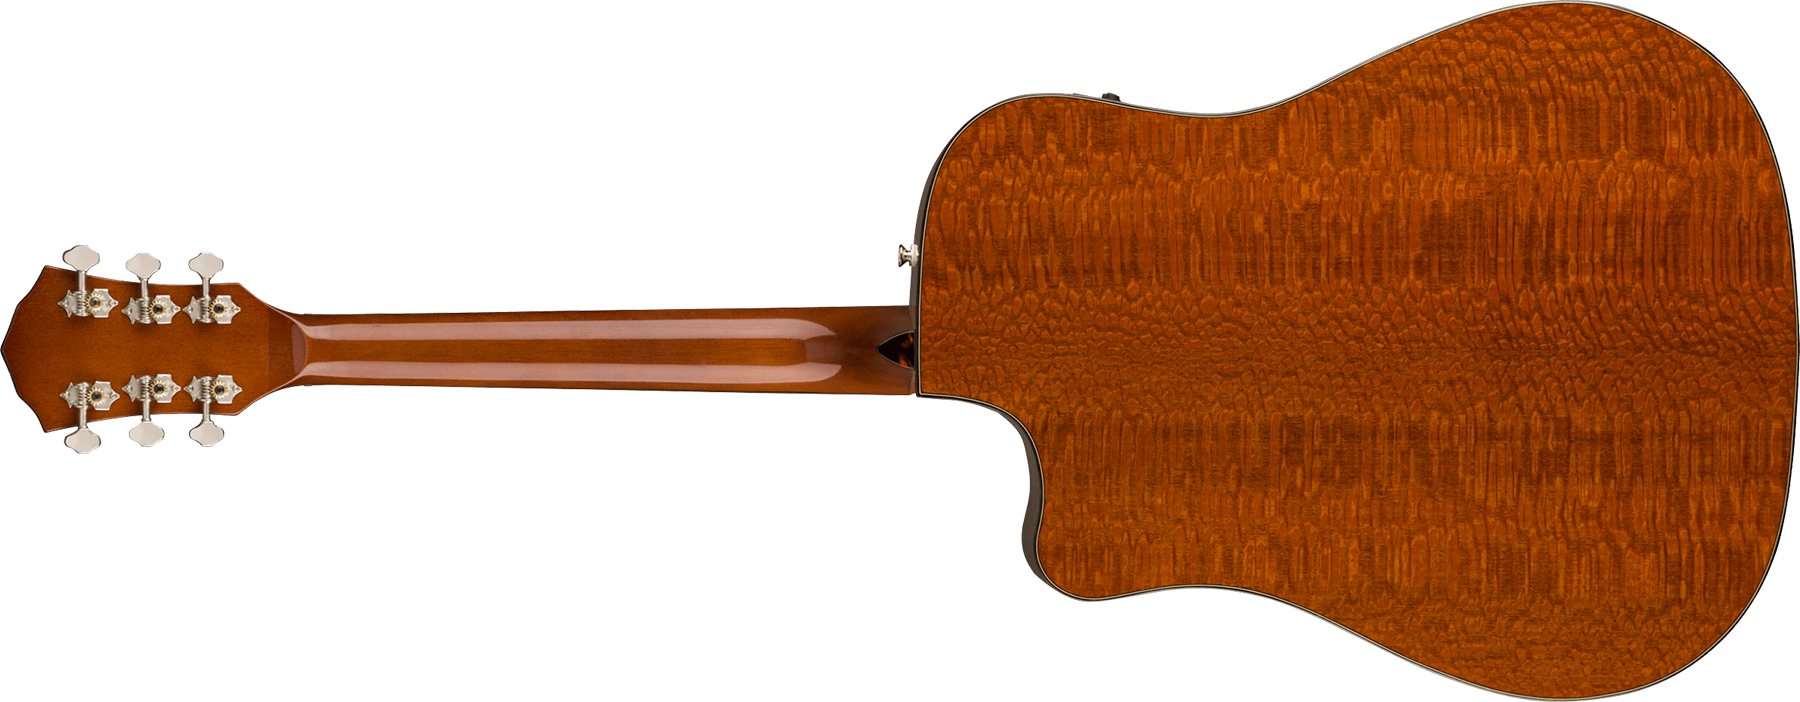 Fender Fa325ce Ltd Dreadnought Cw Erable Lacewood Lau - Moonlight Burst - Elektro-akoestische gitaar - Variation 1